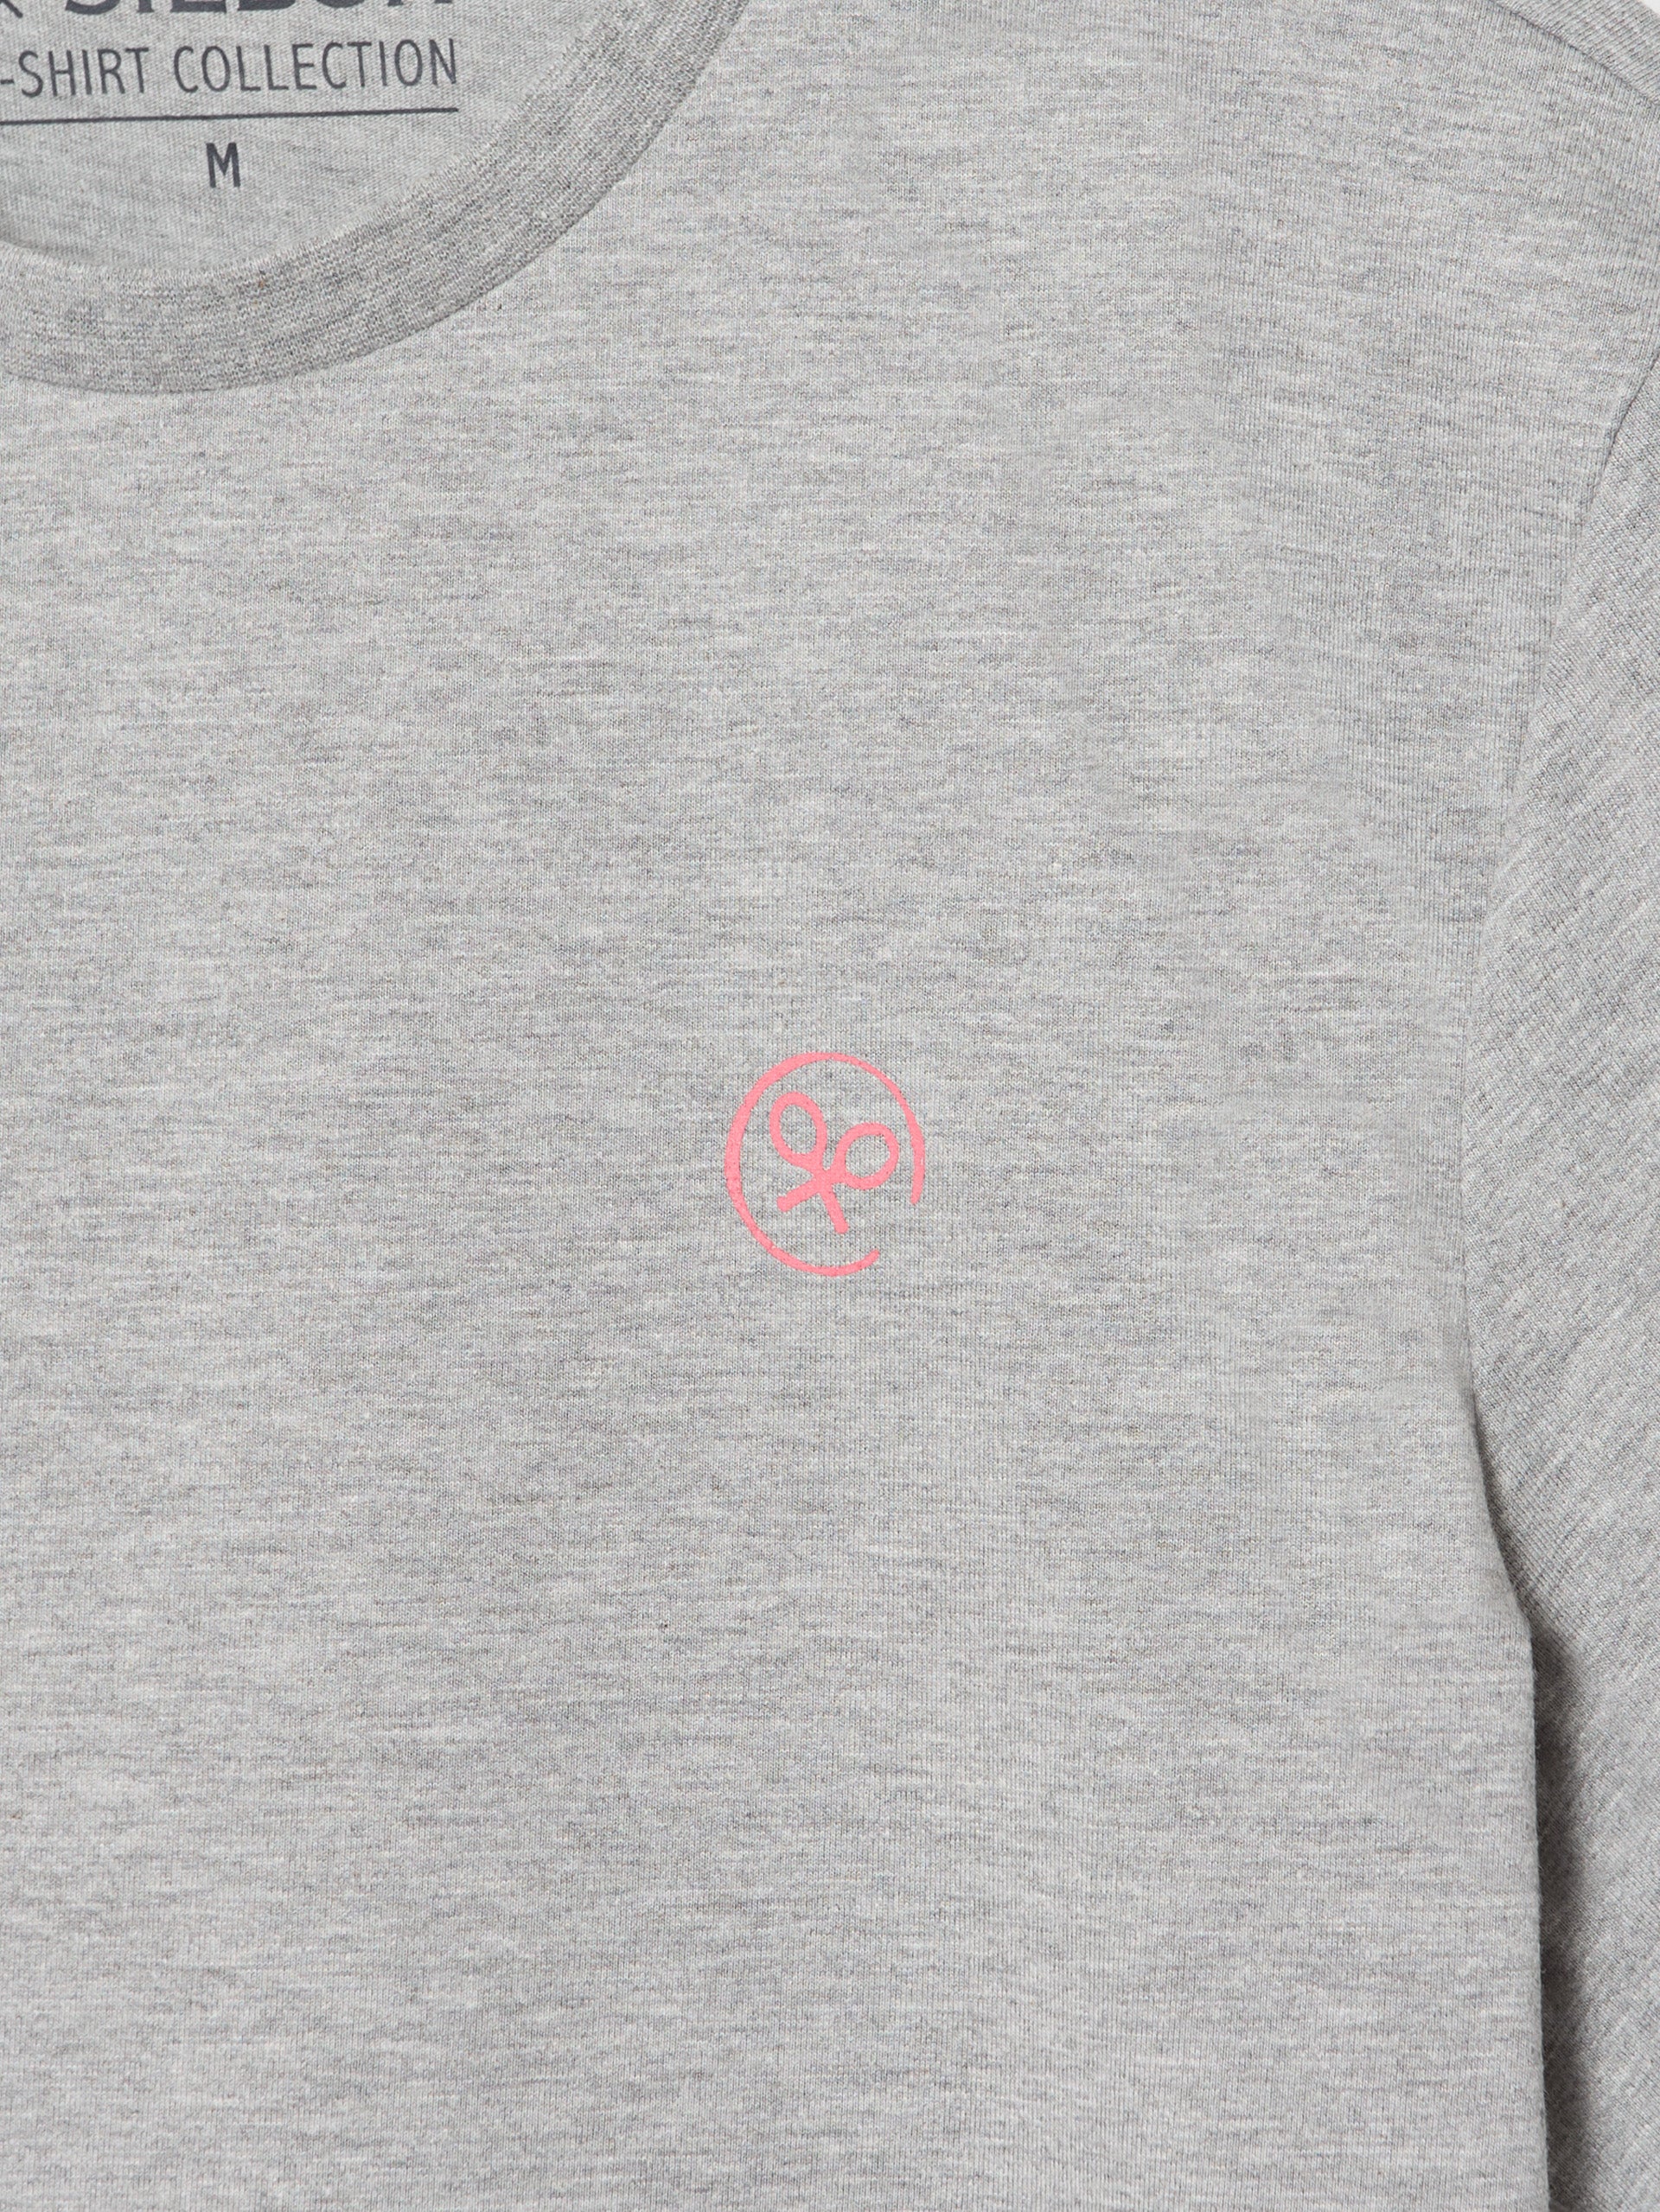 Camiseta circulo raqueta gris